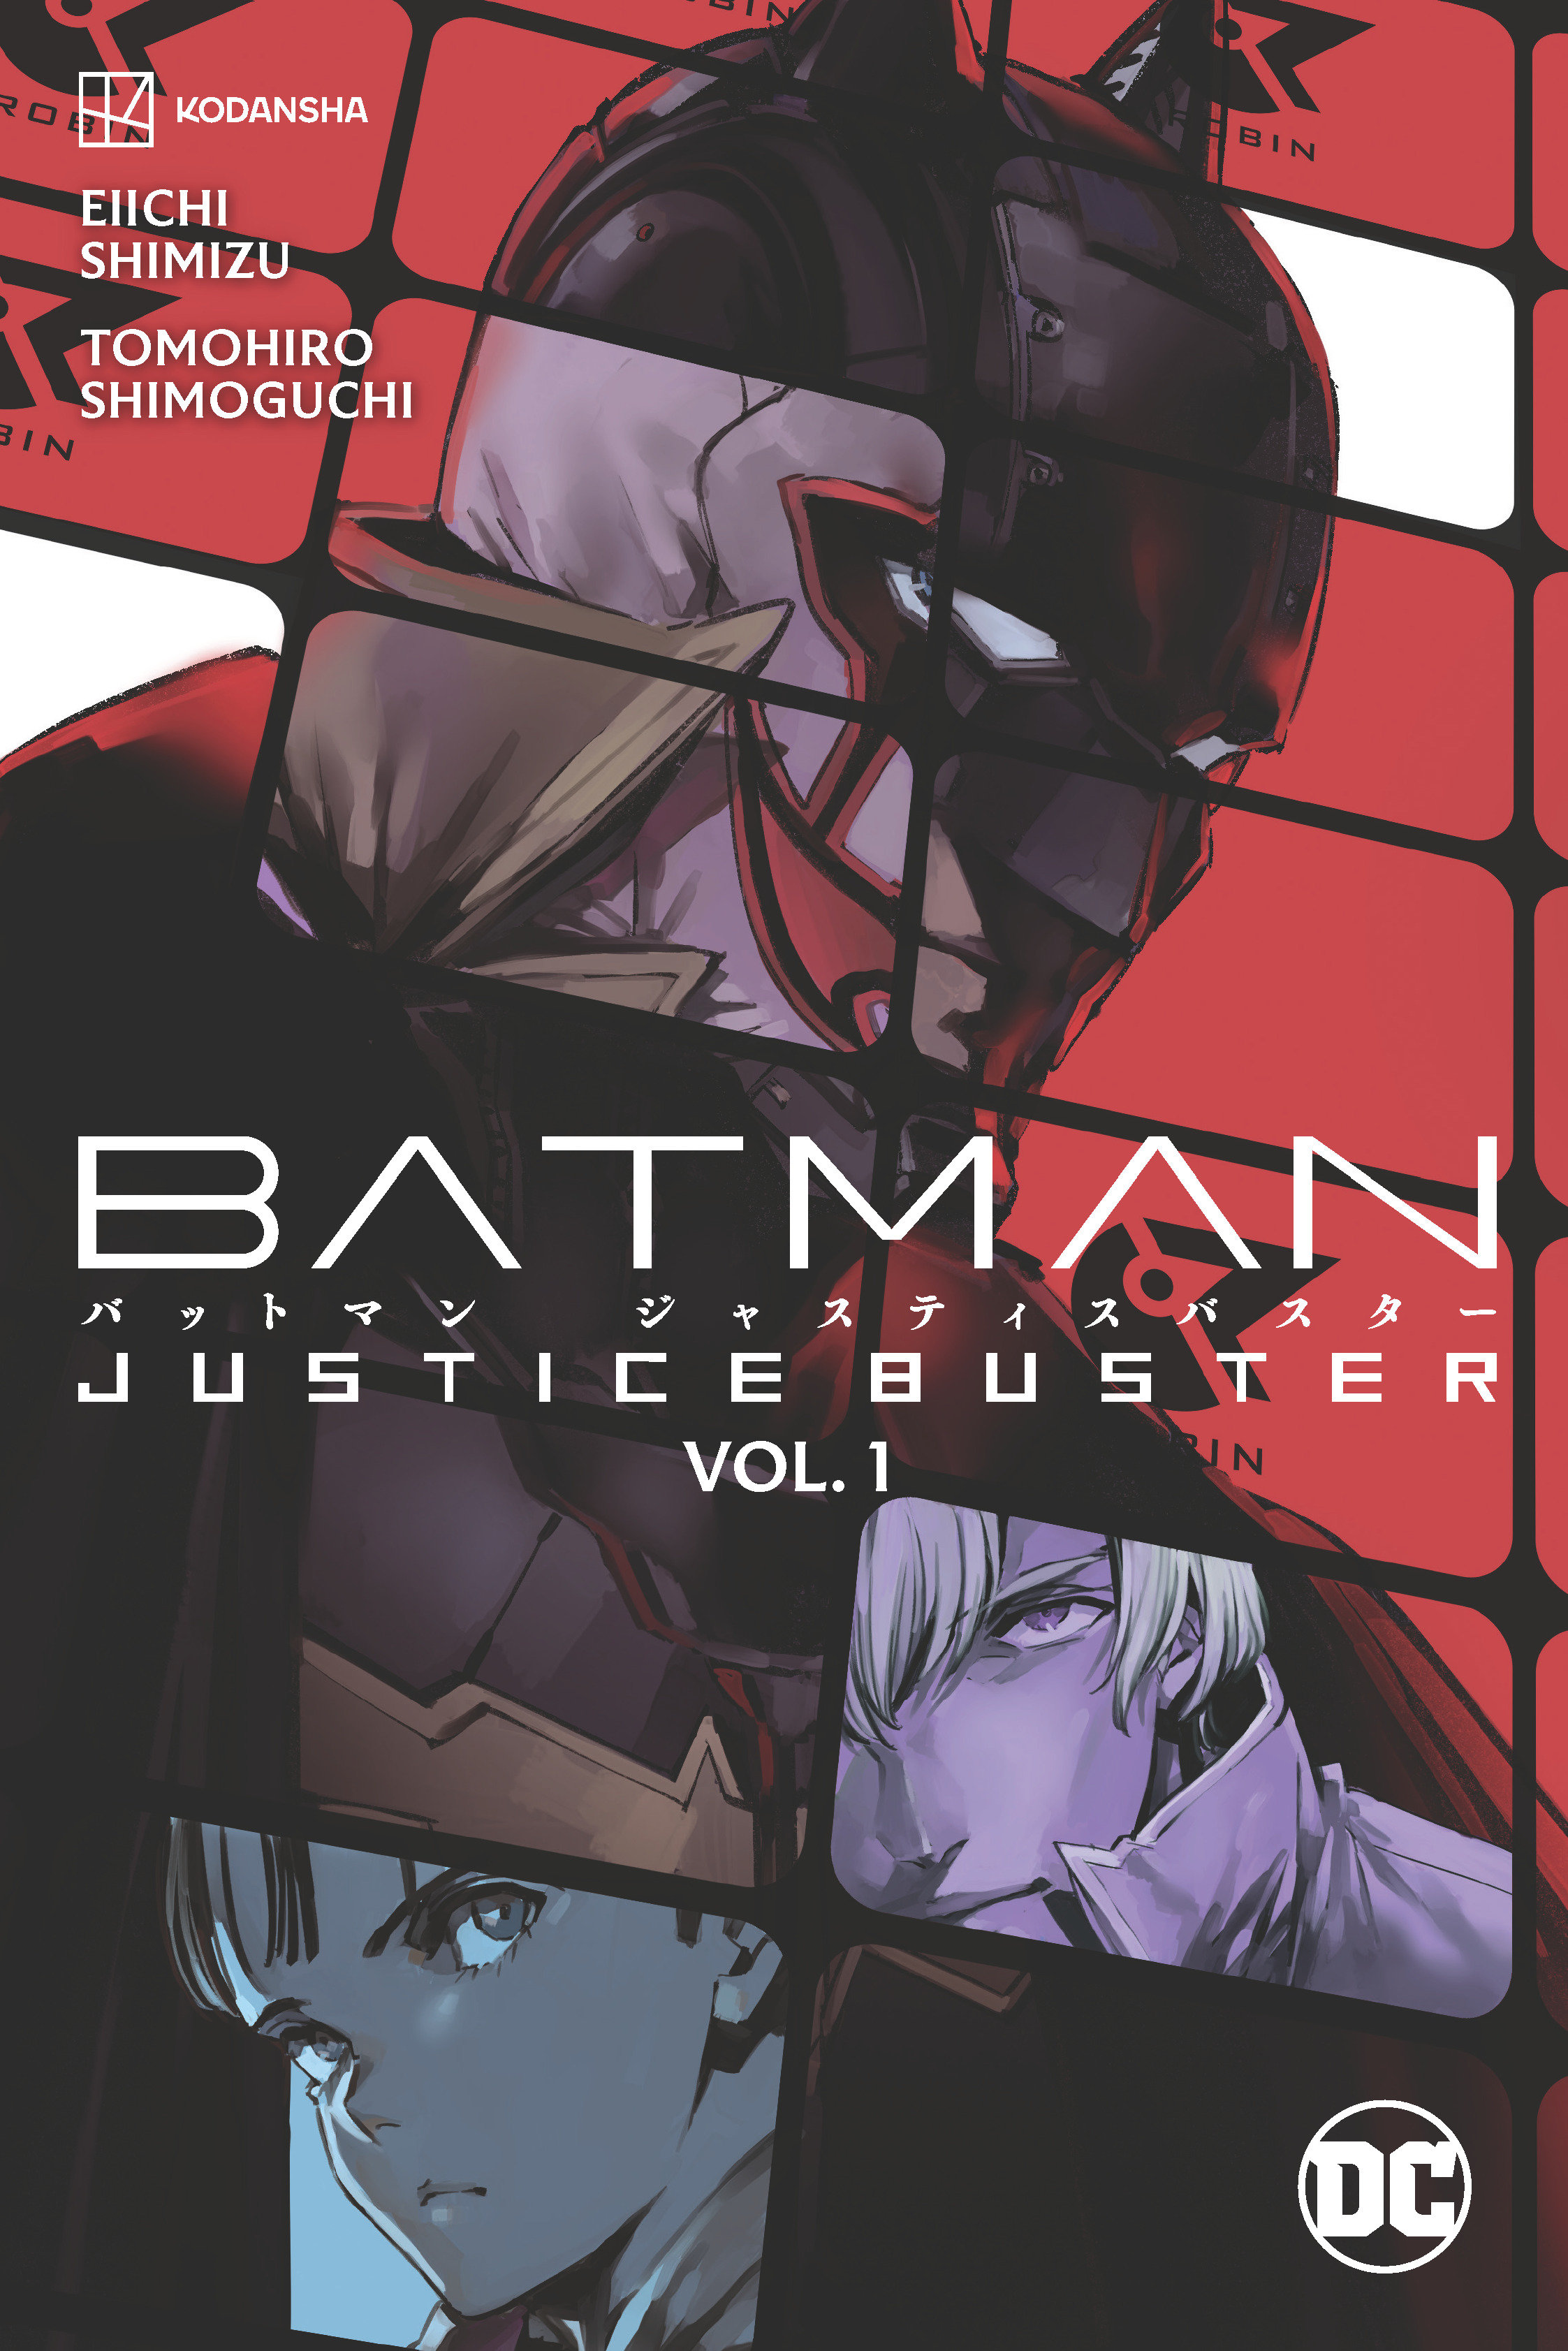 Batman Justice Buster Manga Volume 1